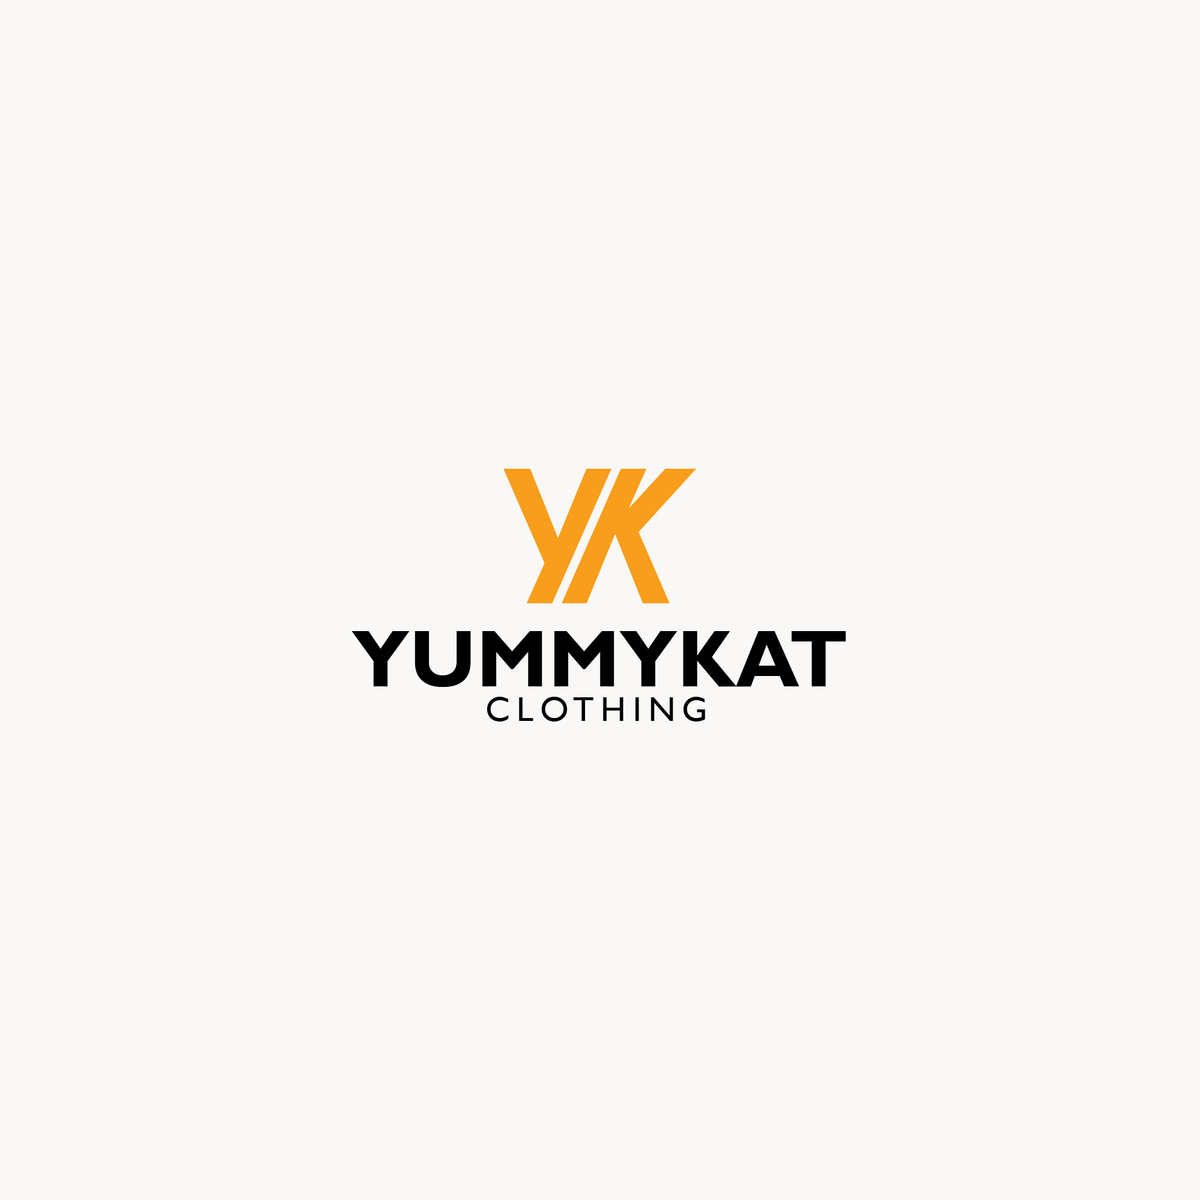 YK logo design by Beniuto Design on Dribbble